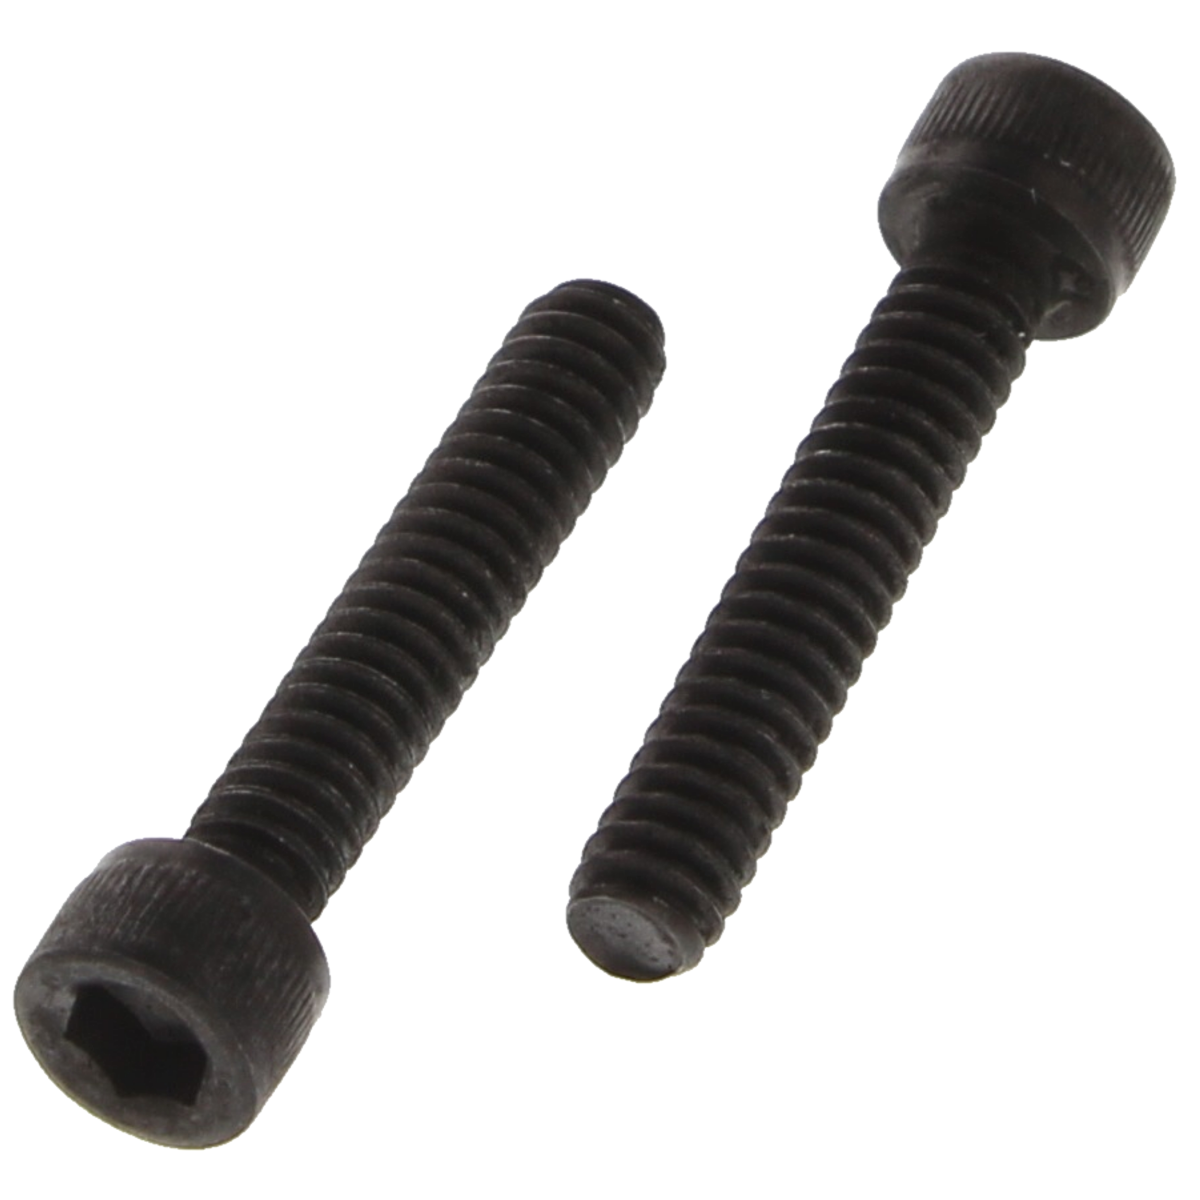 #5-40 x 3/8" Socket Head Cap Screws — Alloy Steel Heat Treated, Coarse Thread, Black Oxide, 100/PKG